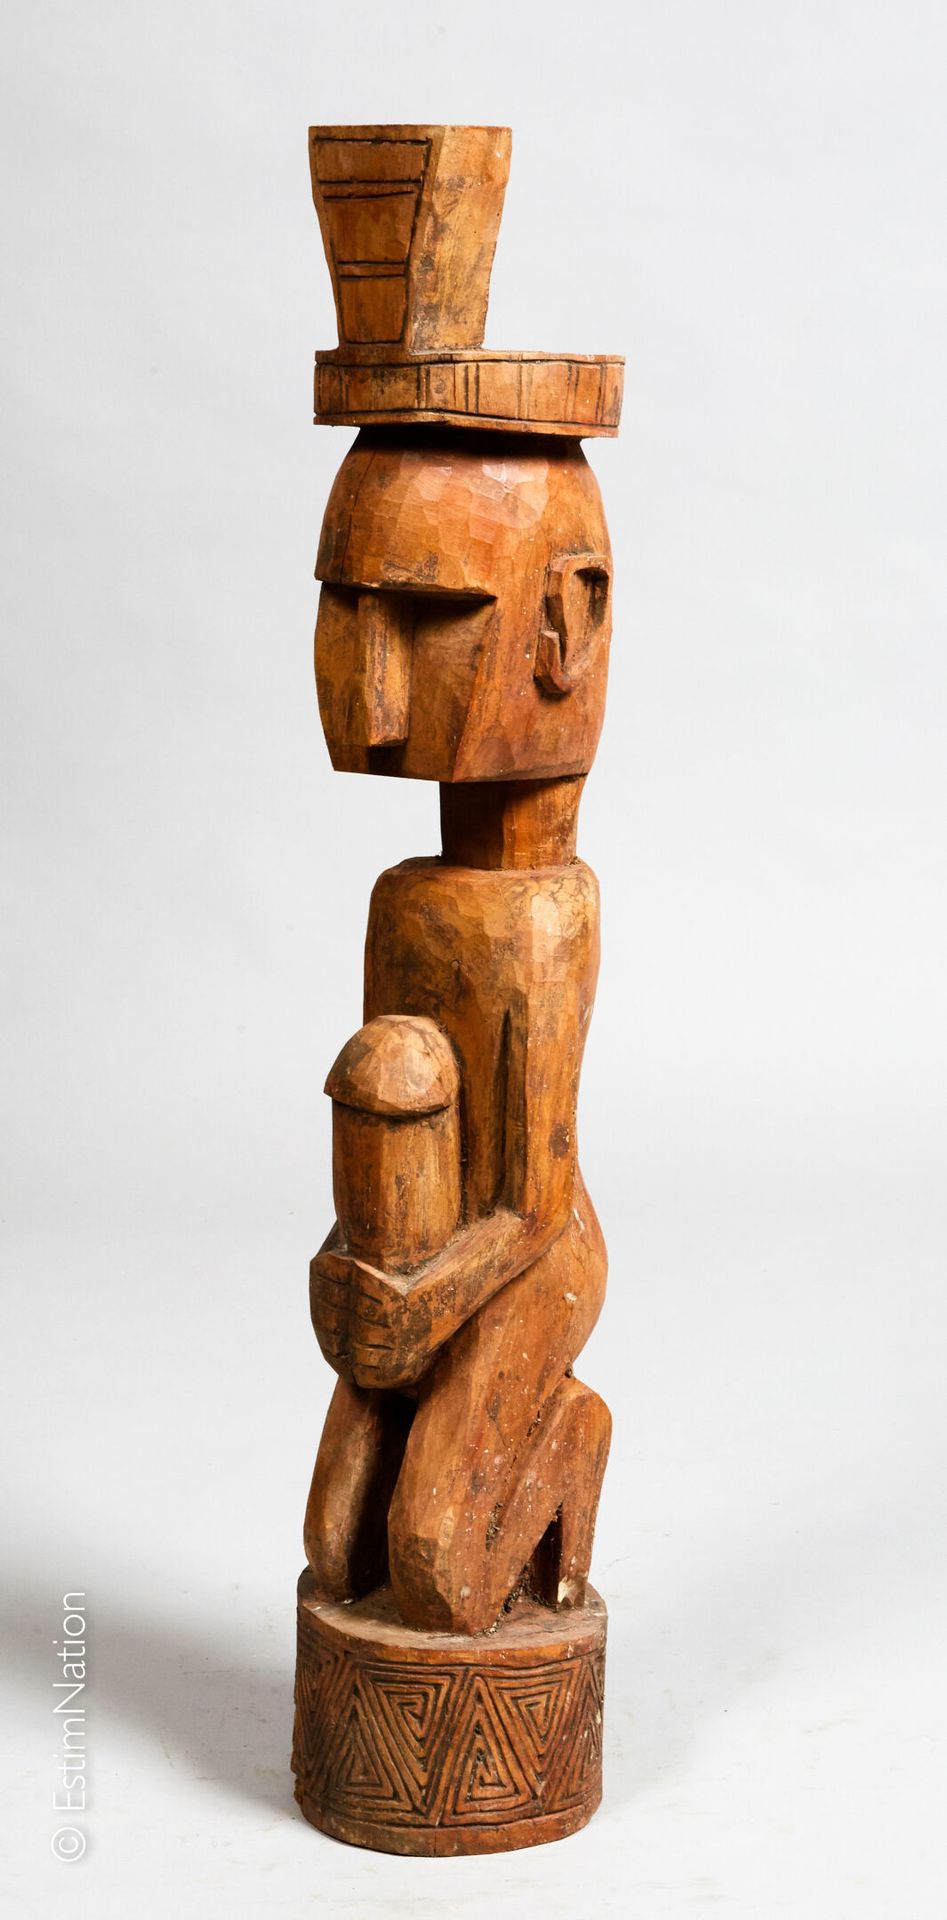 TIMOR TIMOR



Tema de madera tallada y pigmentos naturales que representa a un &hellip;